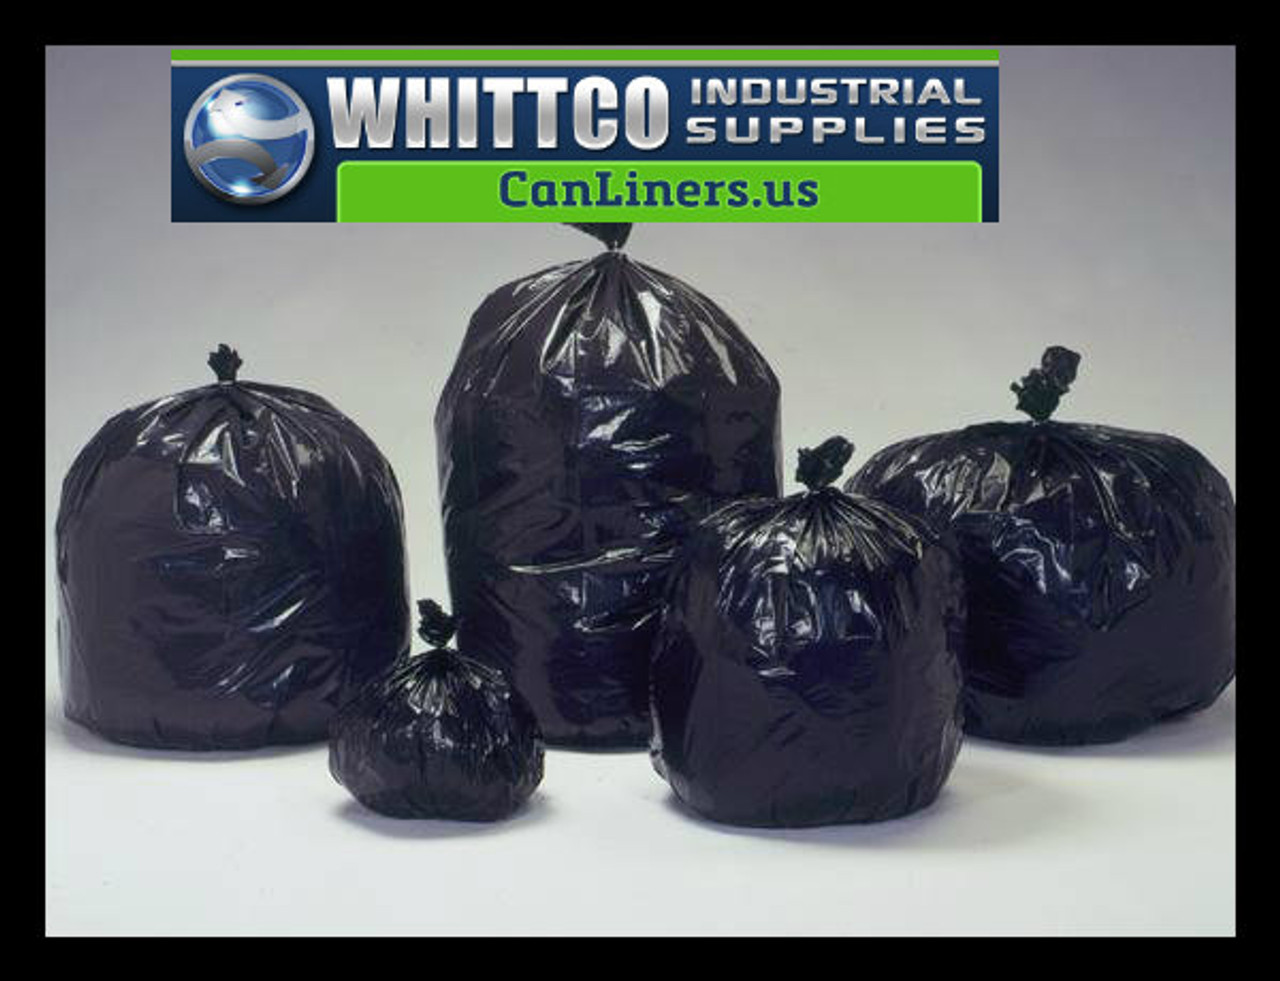 International Plastics Cl-rdb-2423 24 x 23 in. 8-10 Gal Regular Duty Trash Bags - Case of 1000, Men's, Size: 24 in, Black